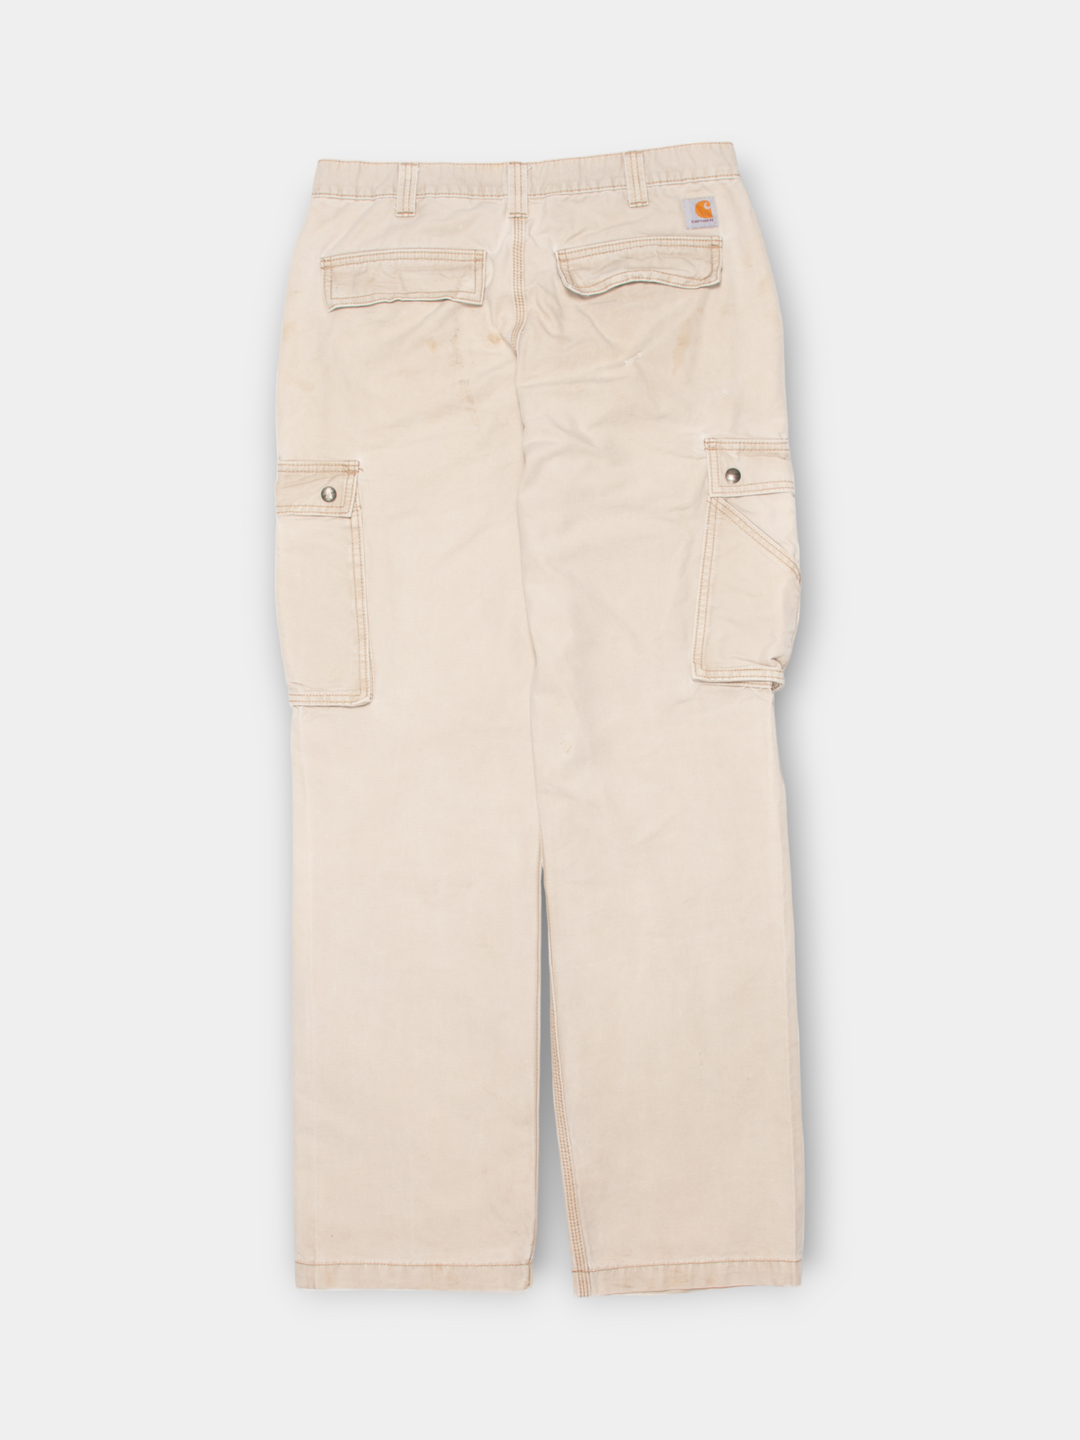 Vintage Carhartt Cargo Pants (34")